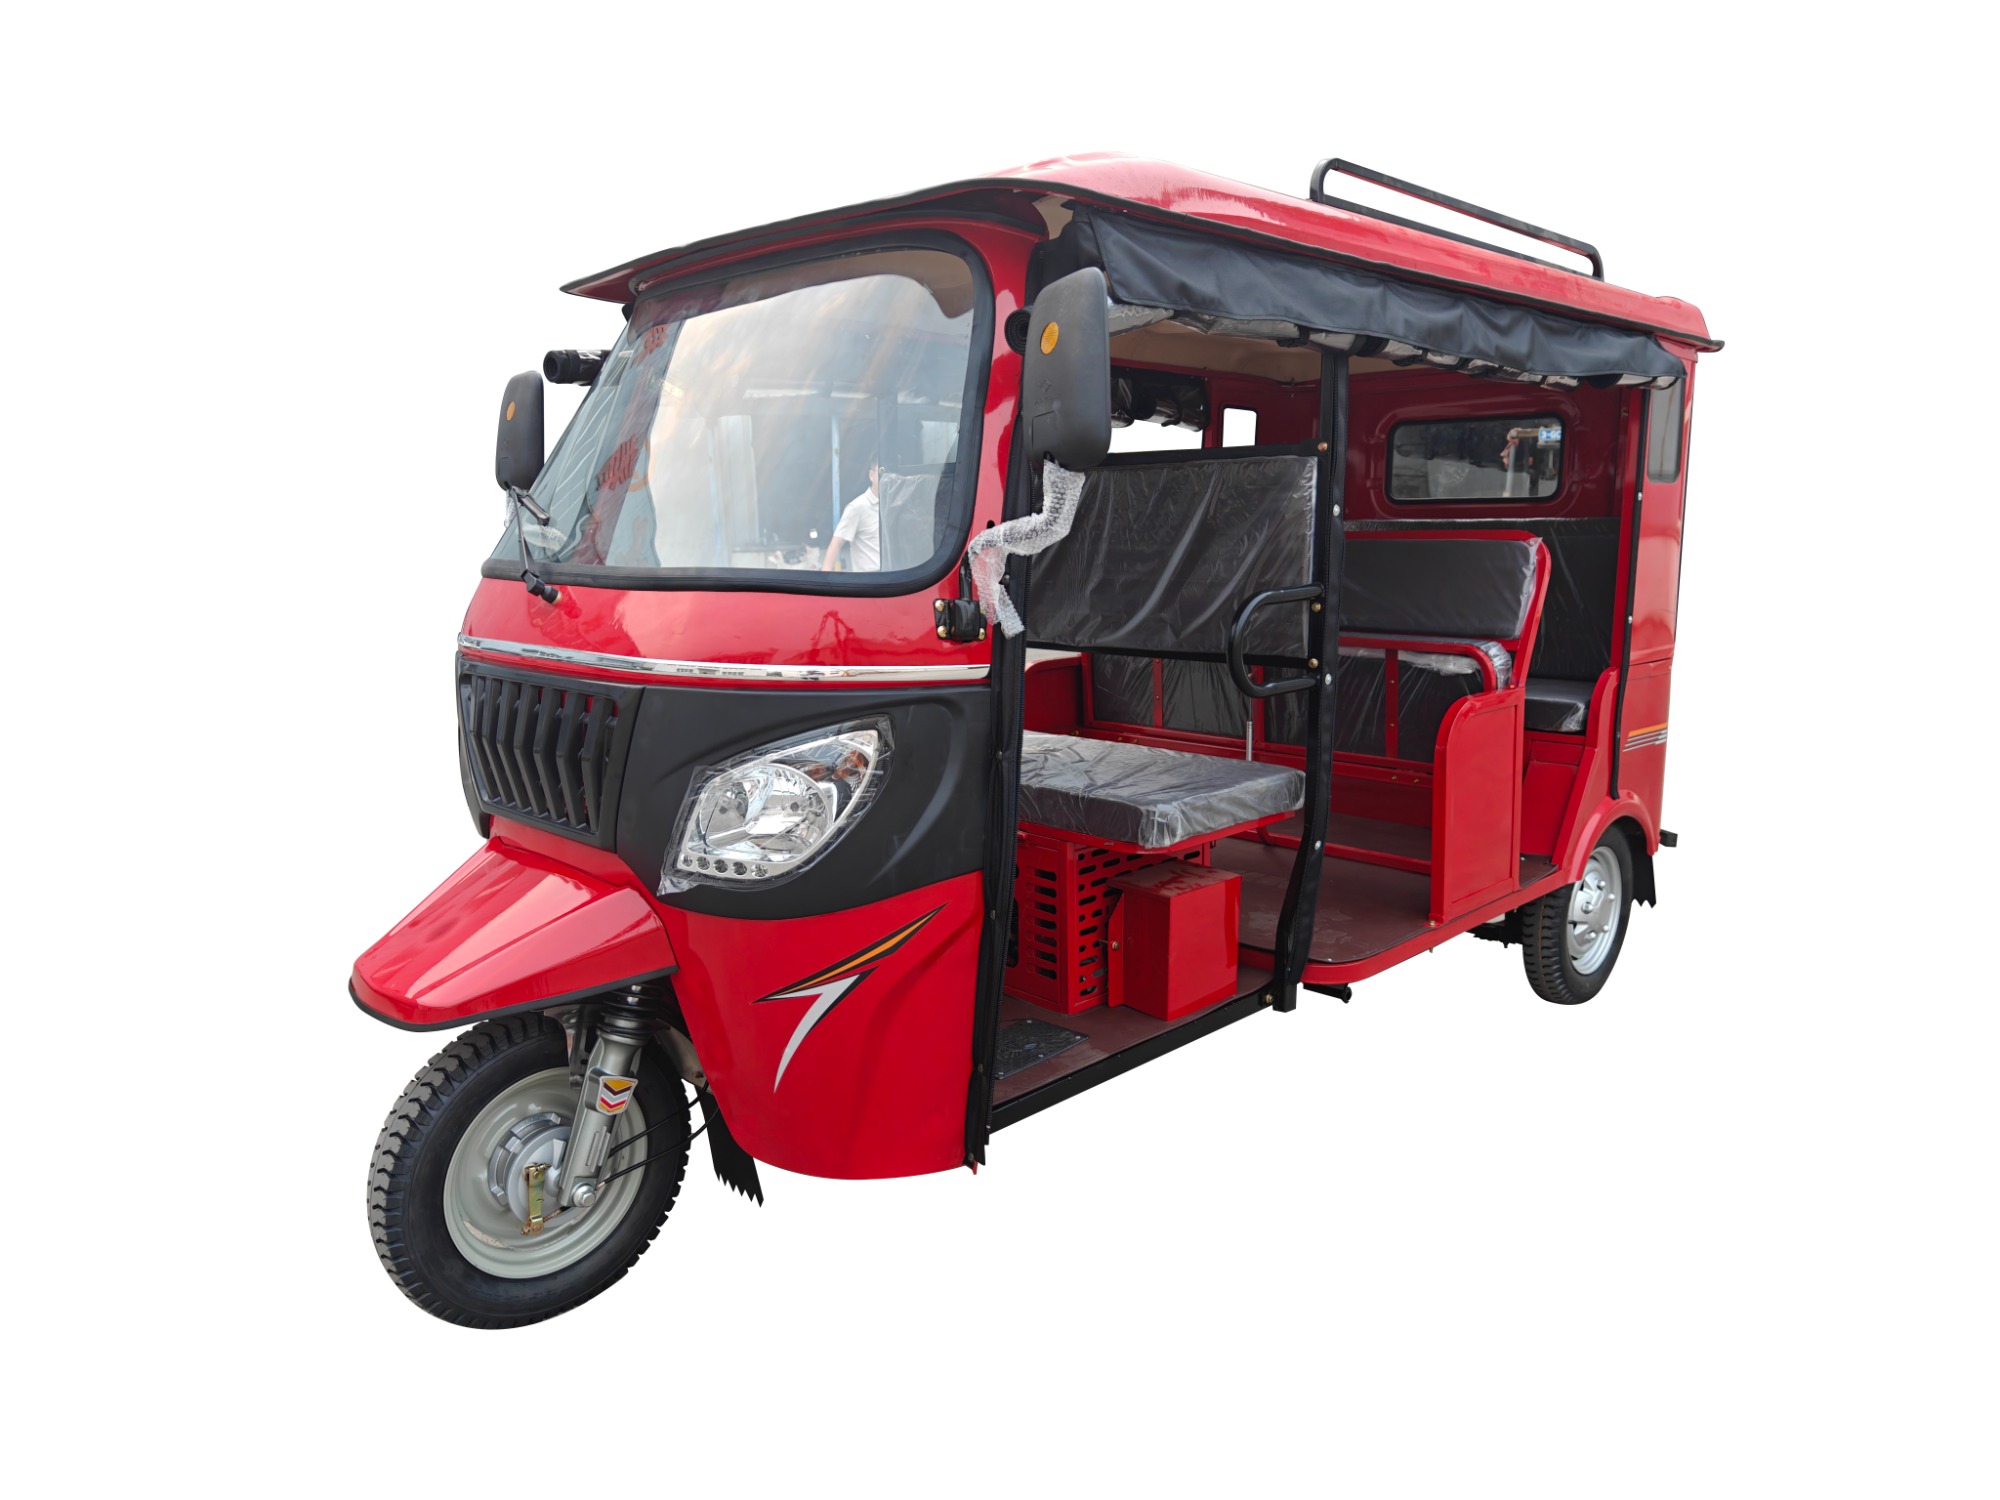 200cc water-cooled gasoline engine/three-wheeled passenger car/tuk-tuk/BAJAJ tricycle/human-powered tricycle/three-wheeled taxi